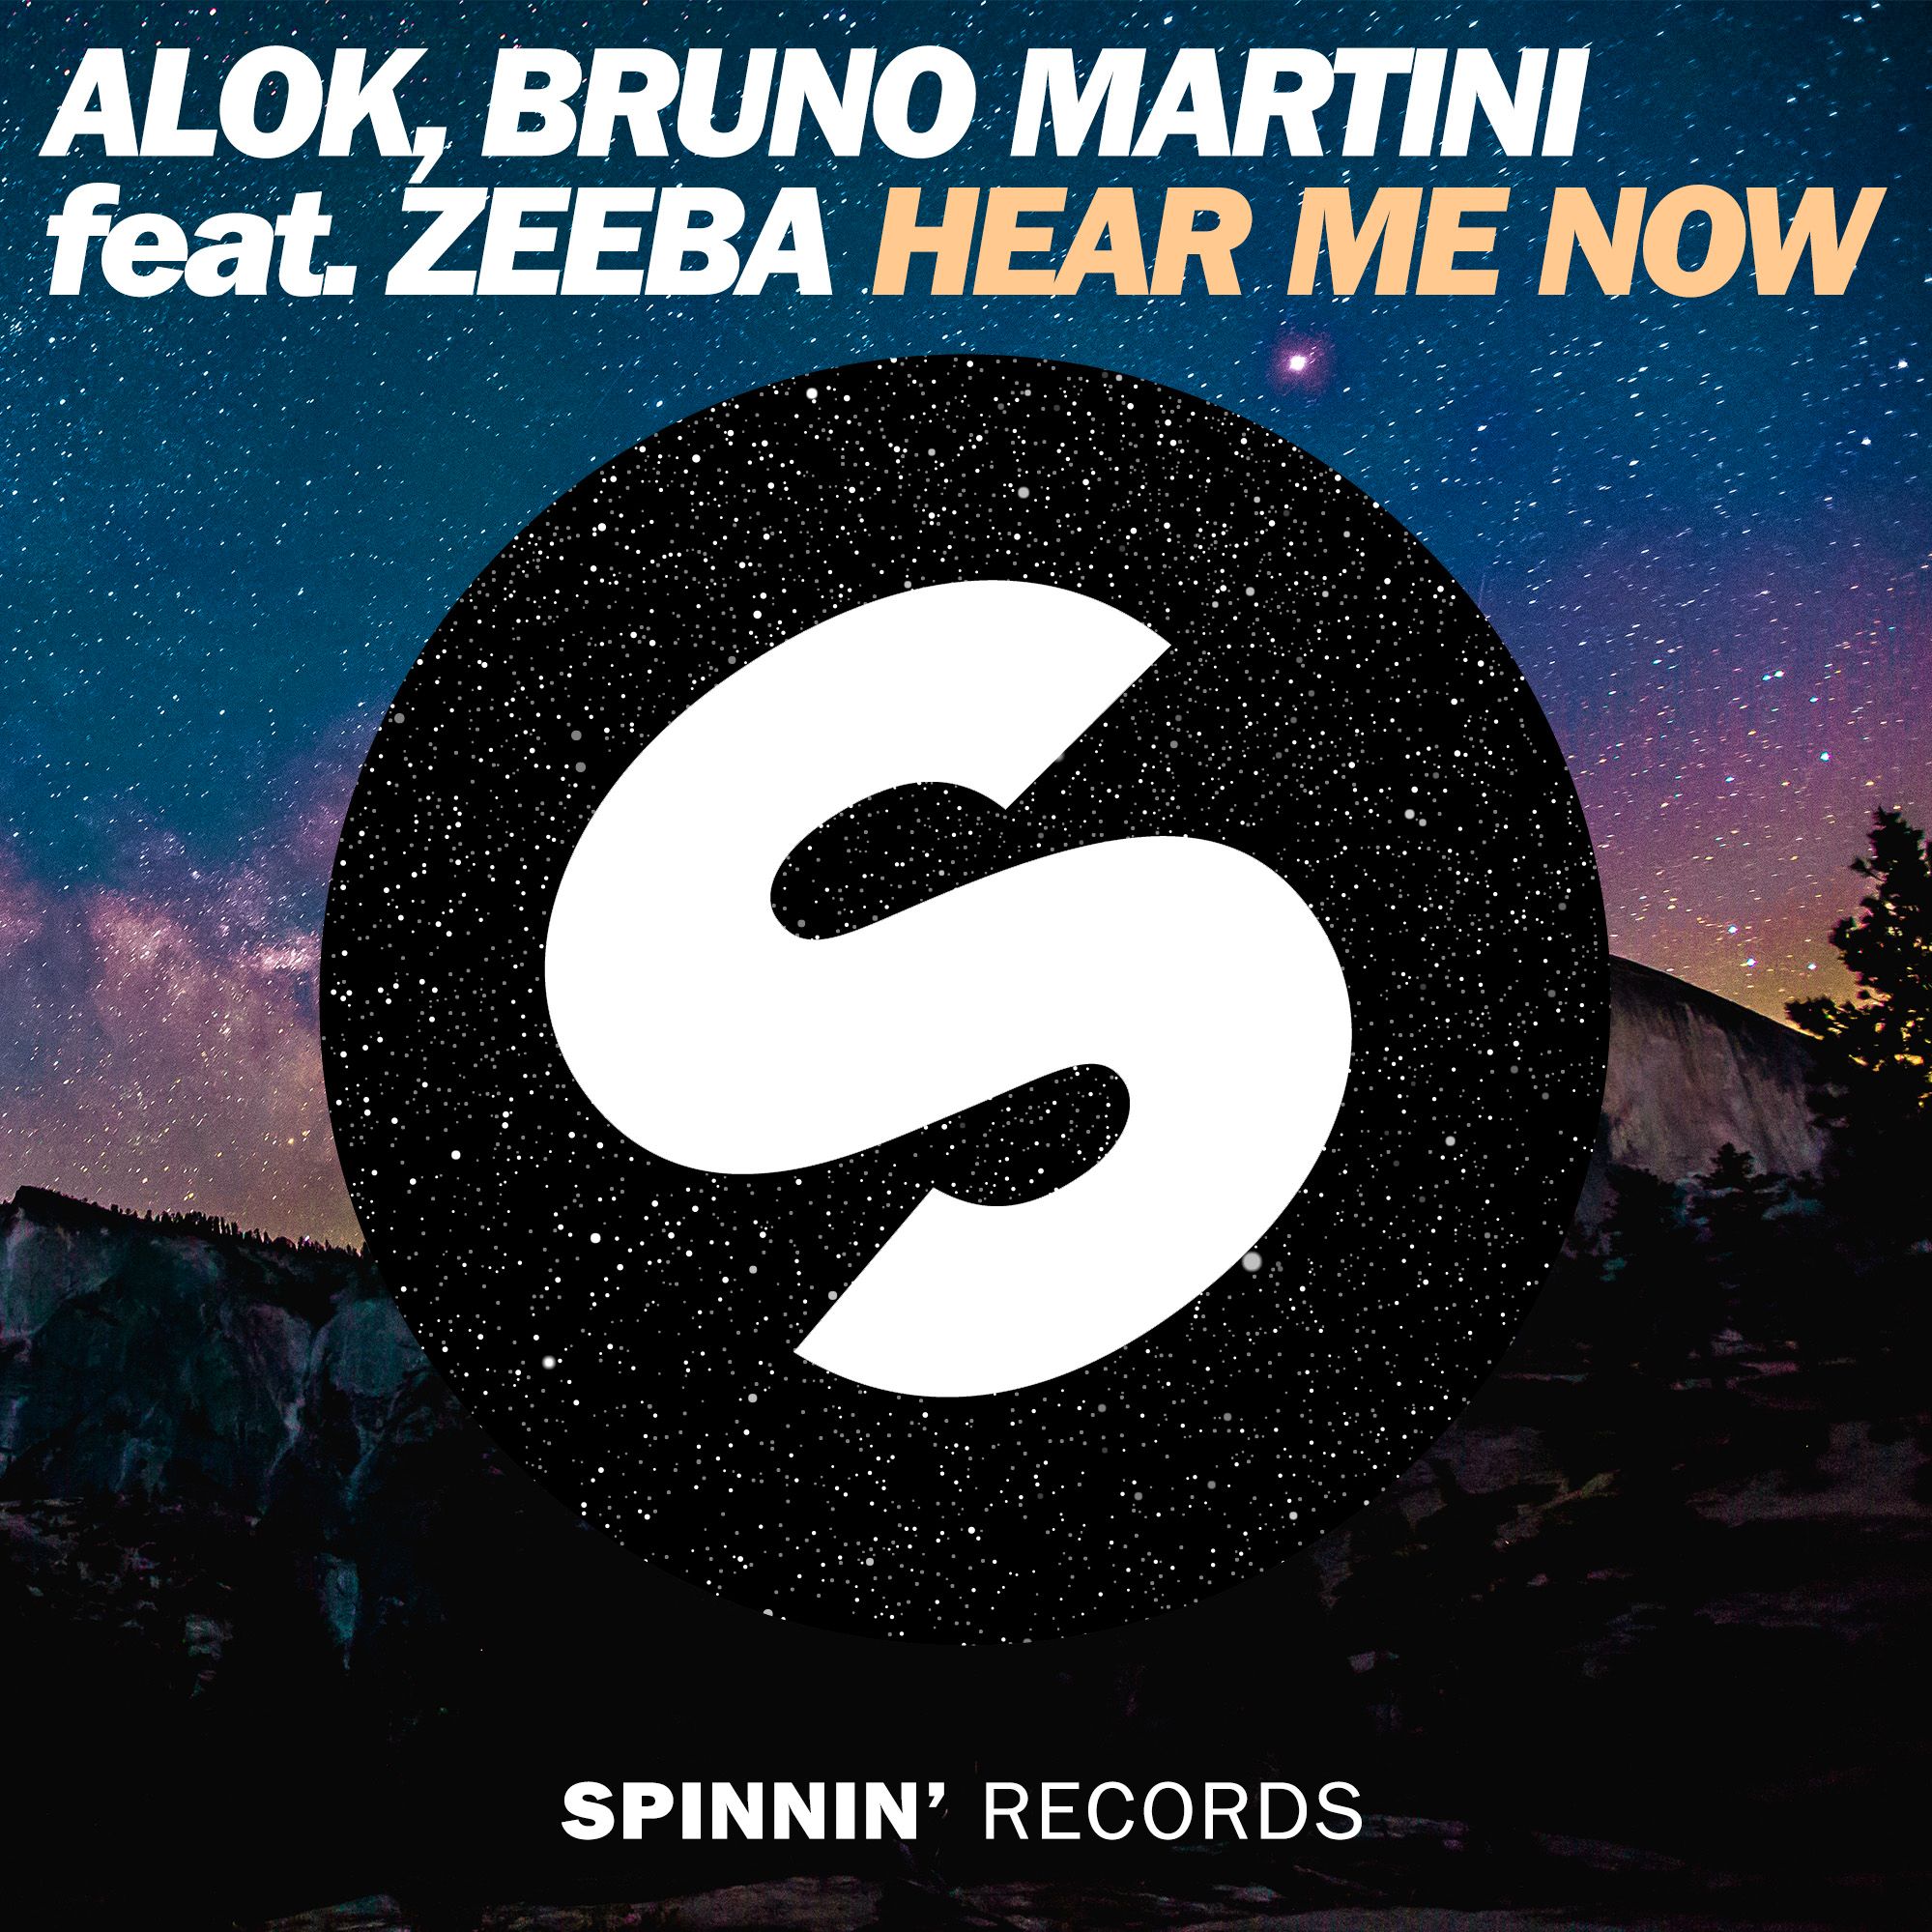 Preuzimanje datoteka Alok, Bruno Martini Feat. Zeeba - Hear Me Now [OUT NOW]